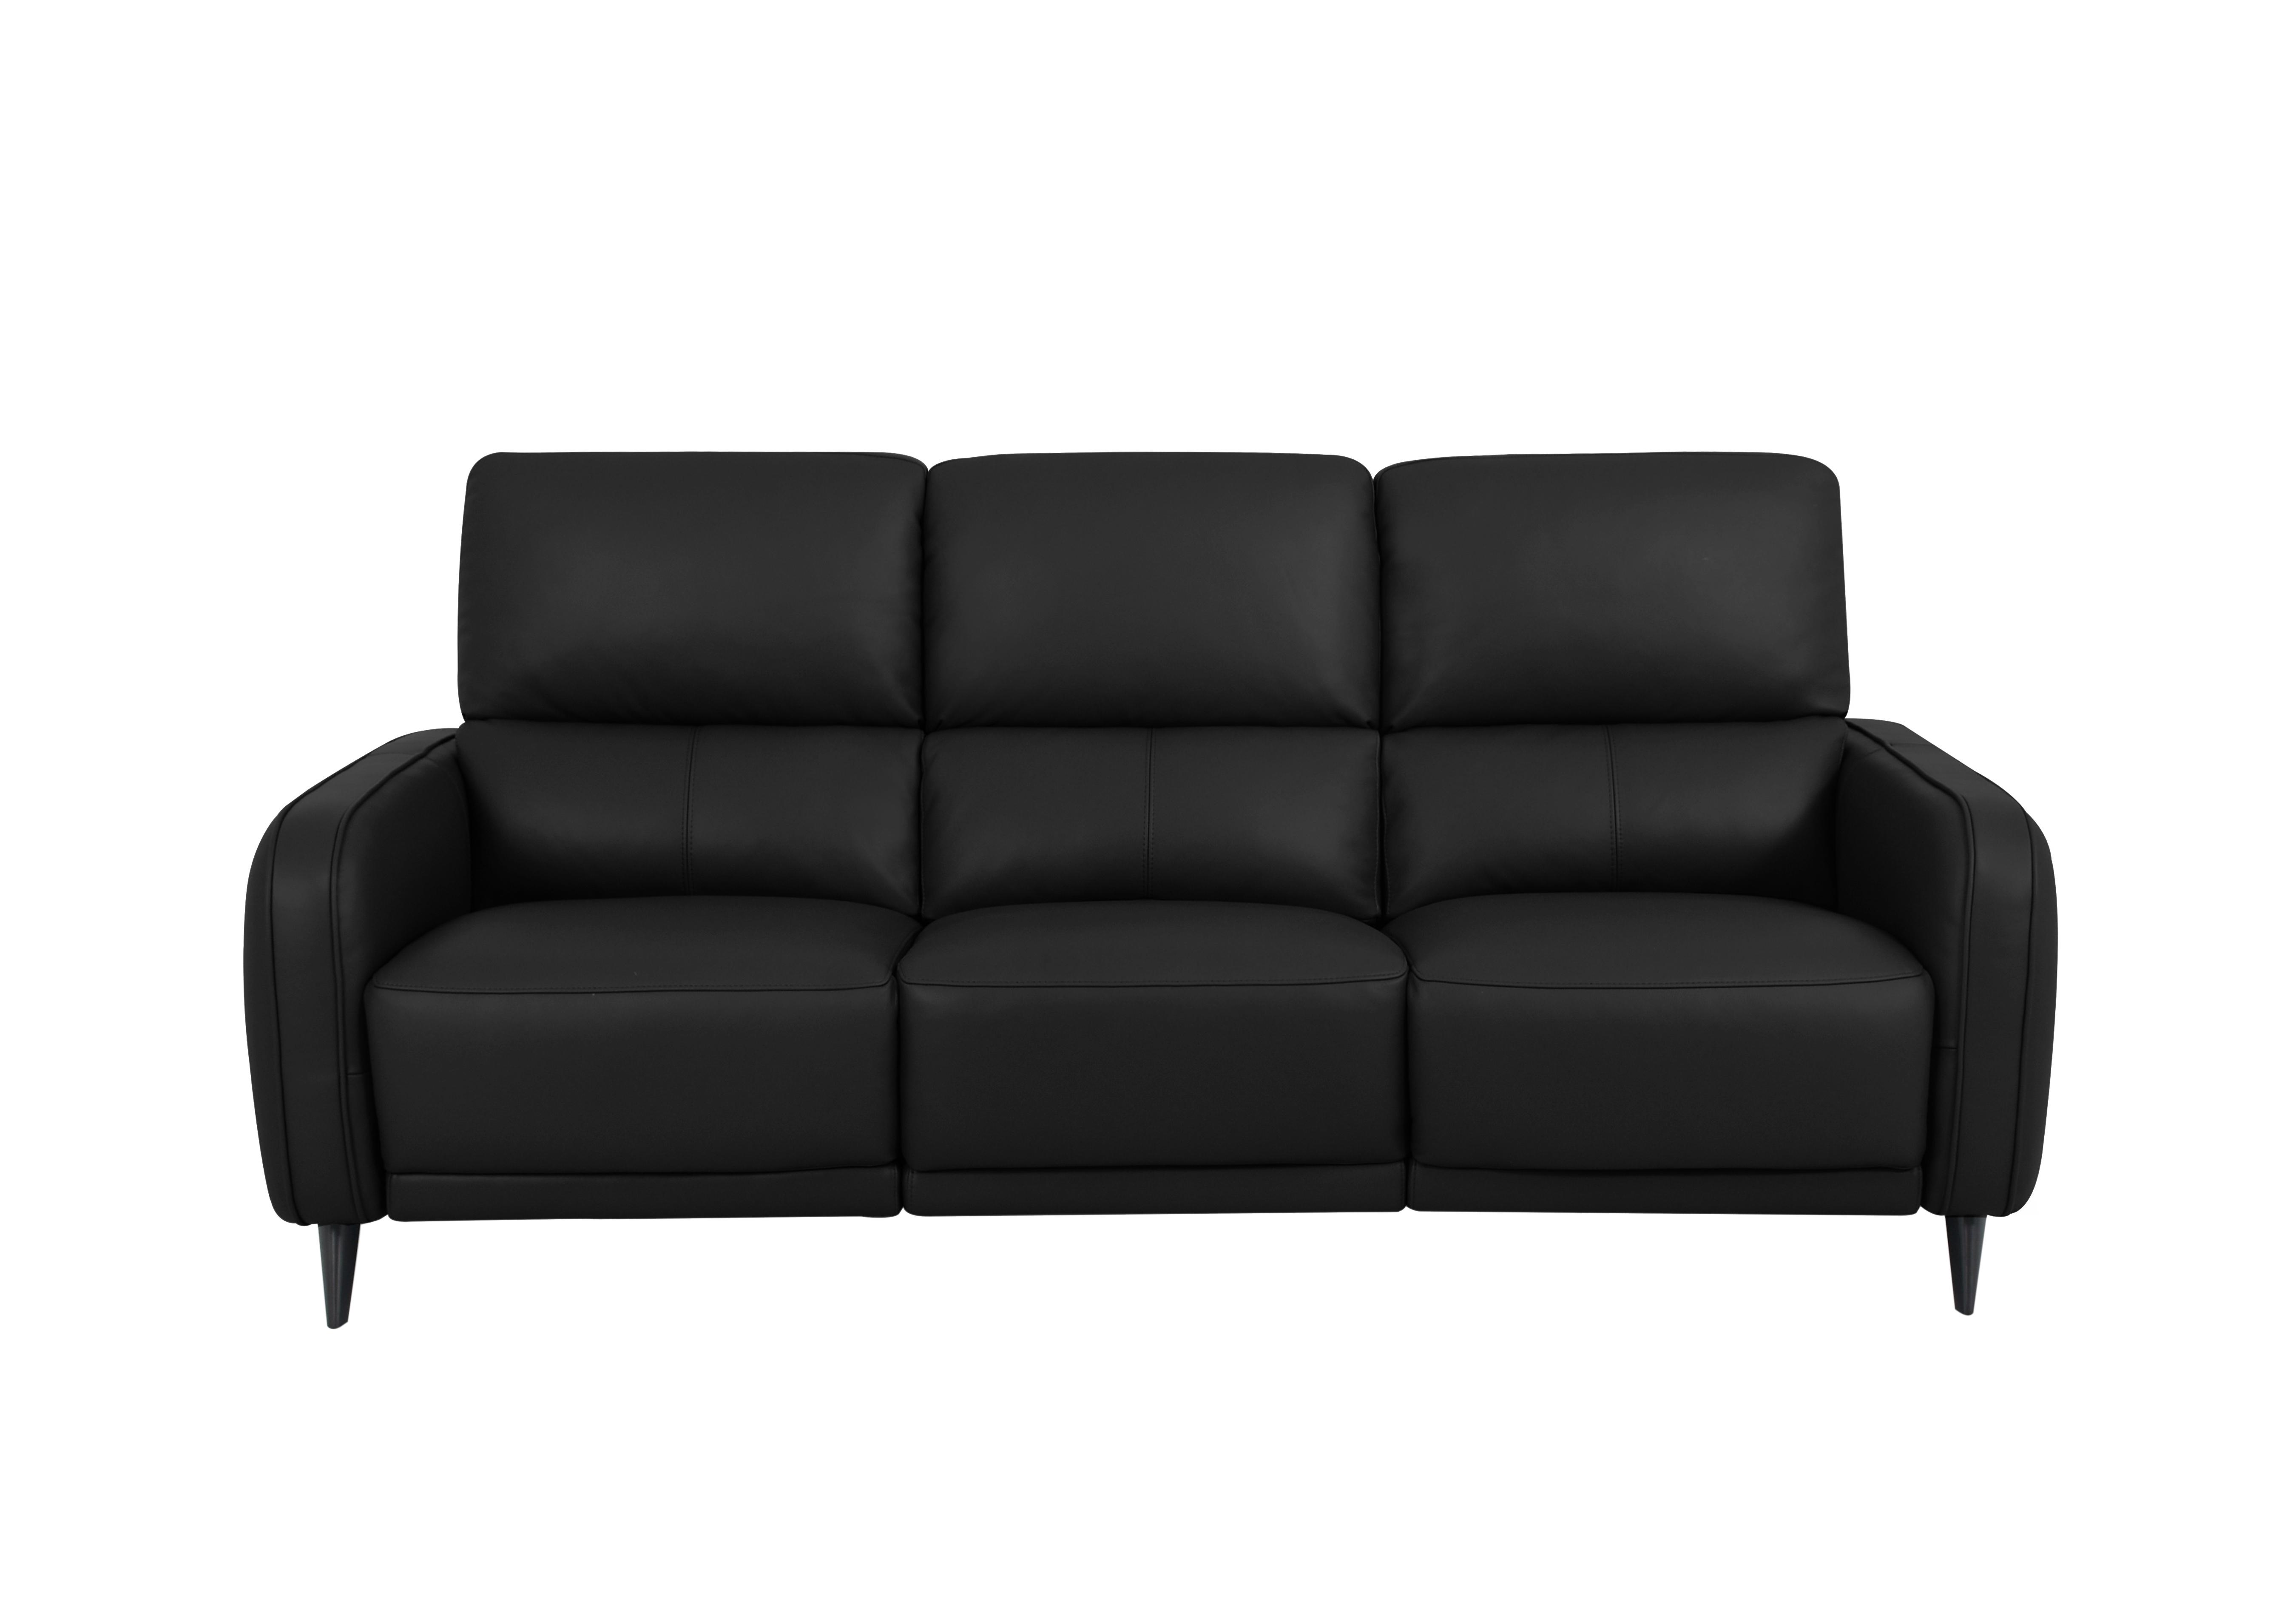 Logan 3 Seater Leather Sofa in Nn-514e Black on Furniture Village